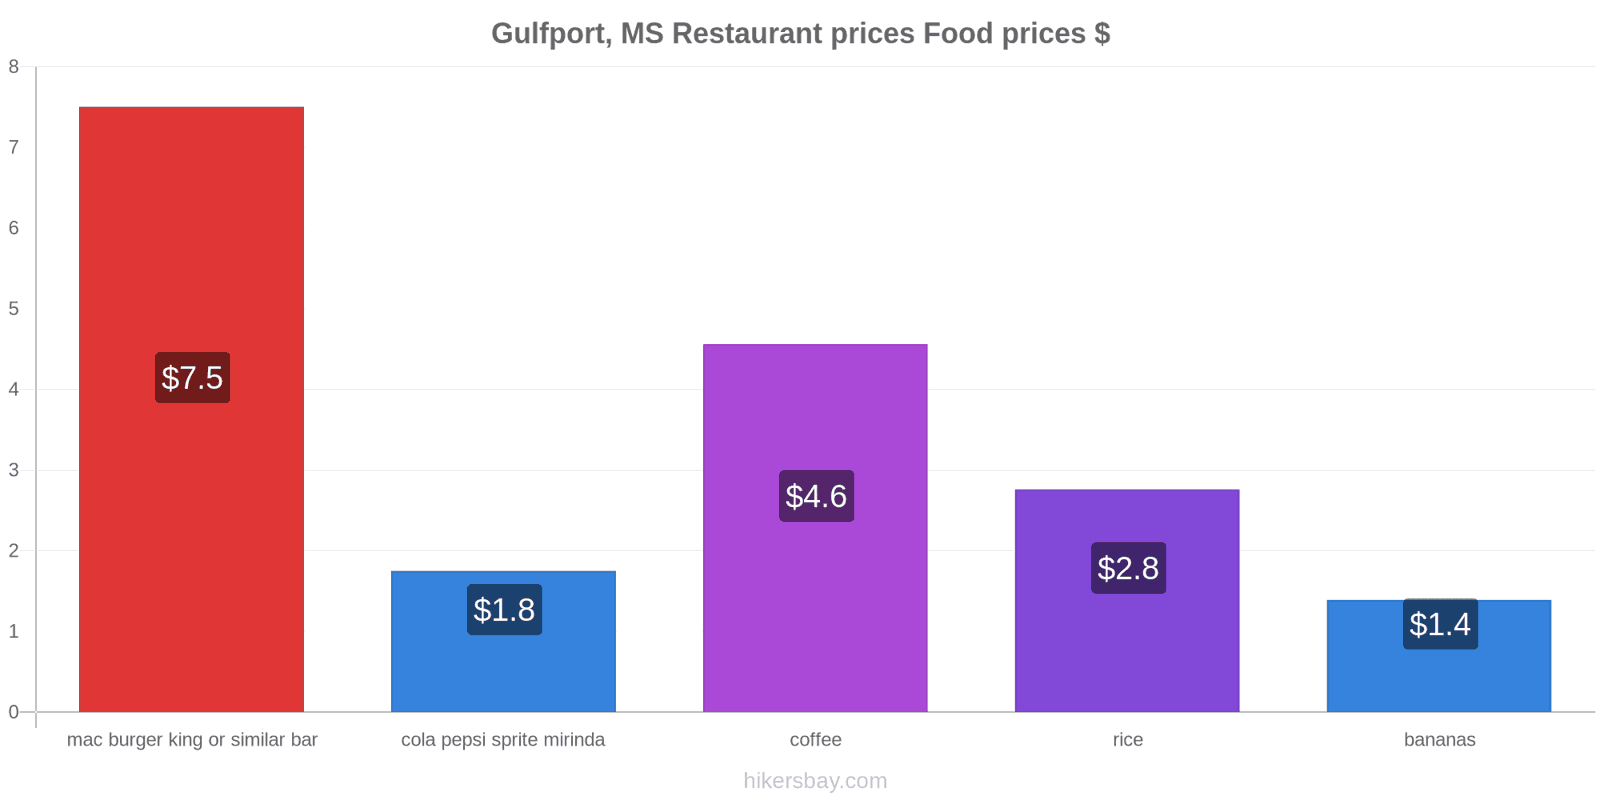 Gulfport, MS price changes hikersbay.com